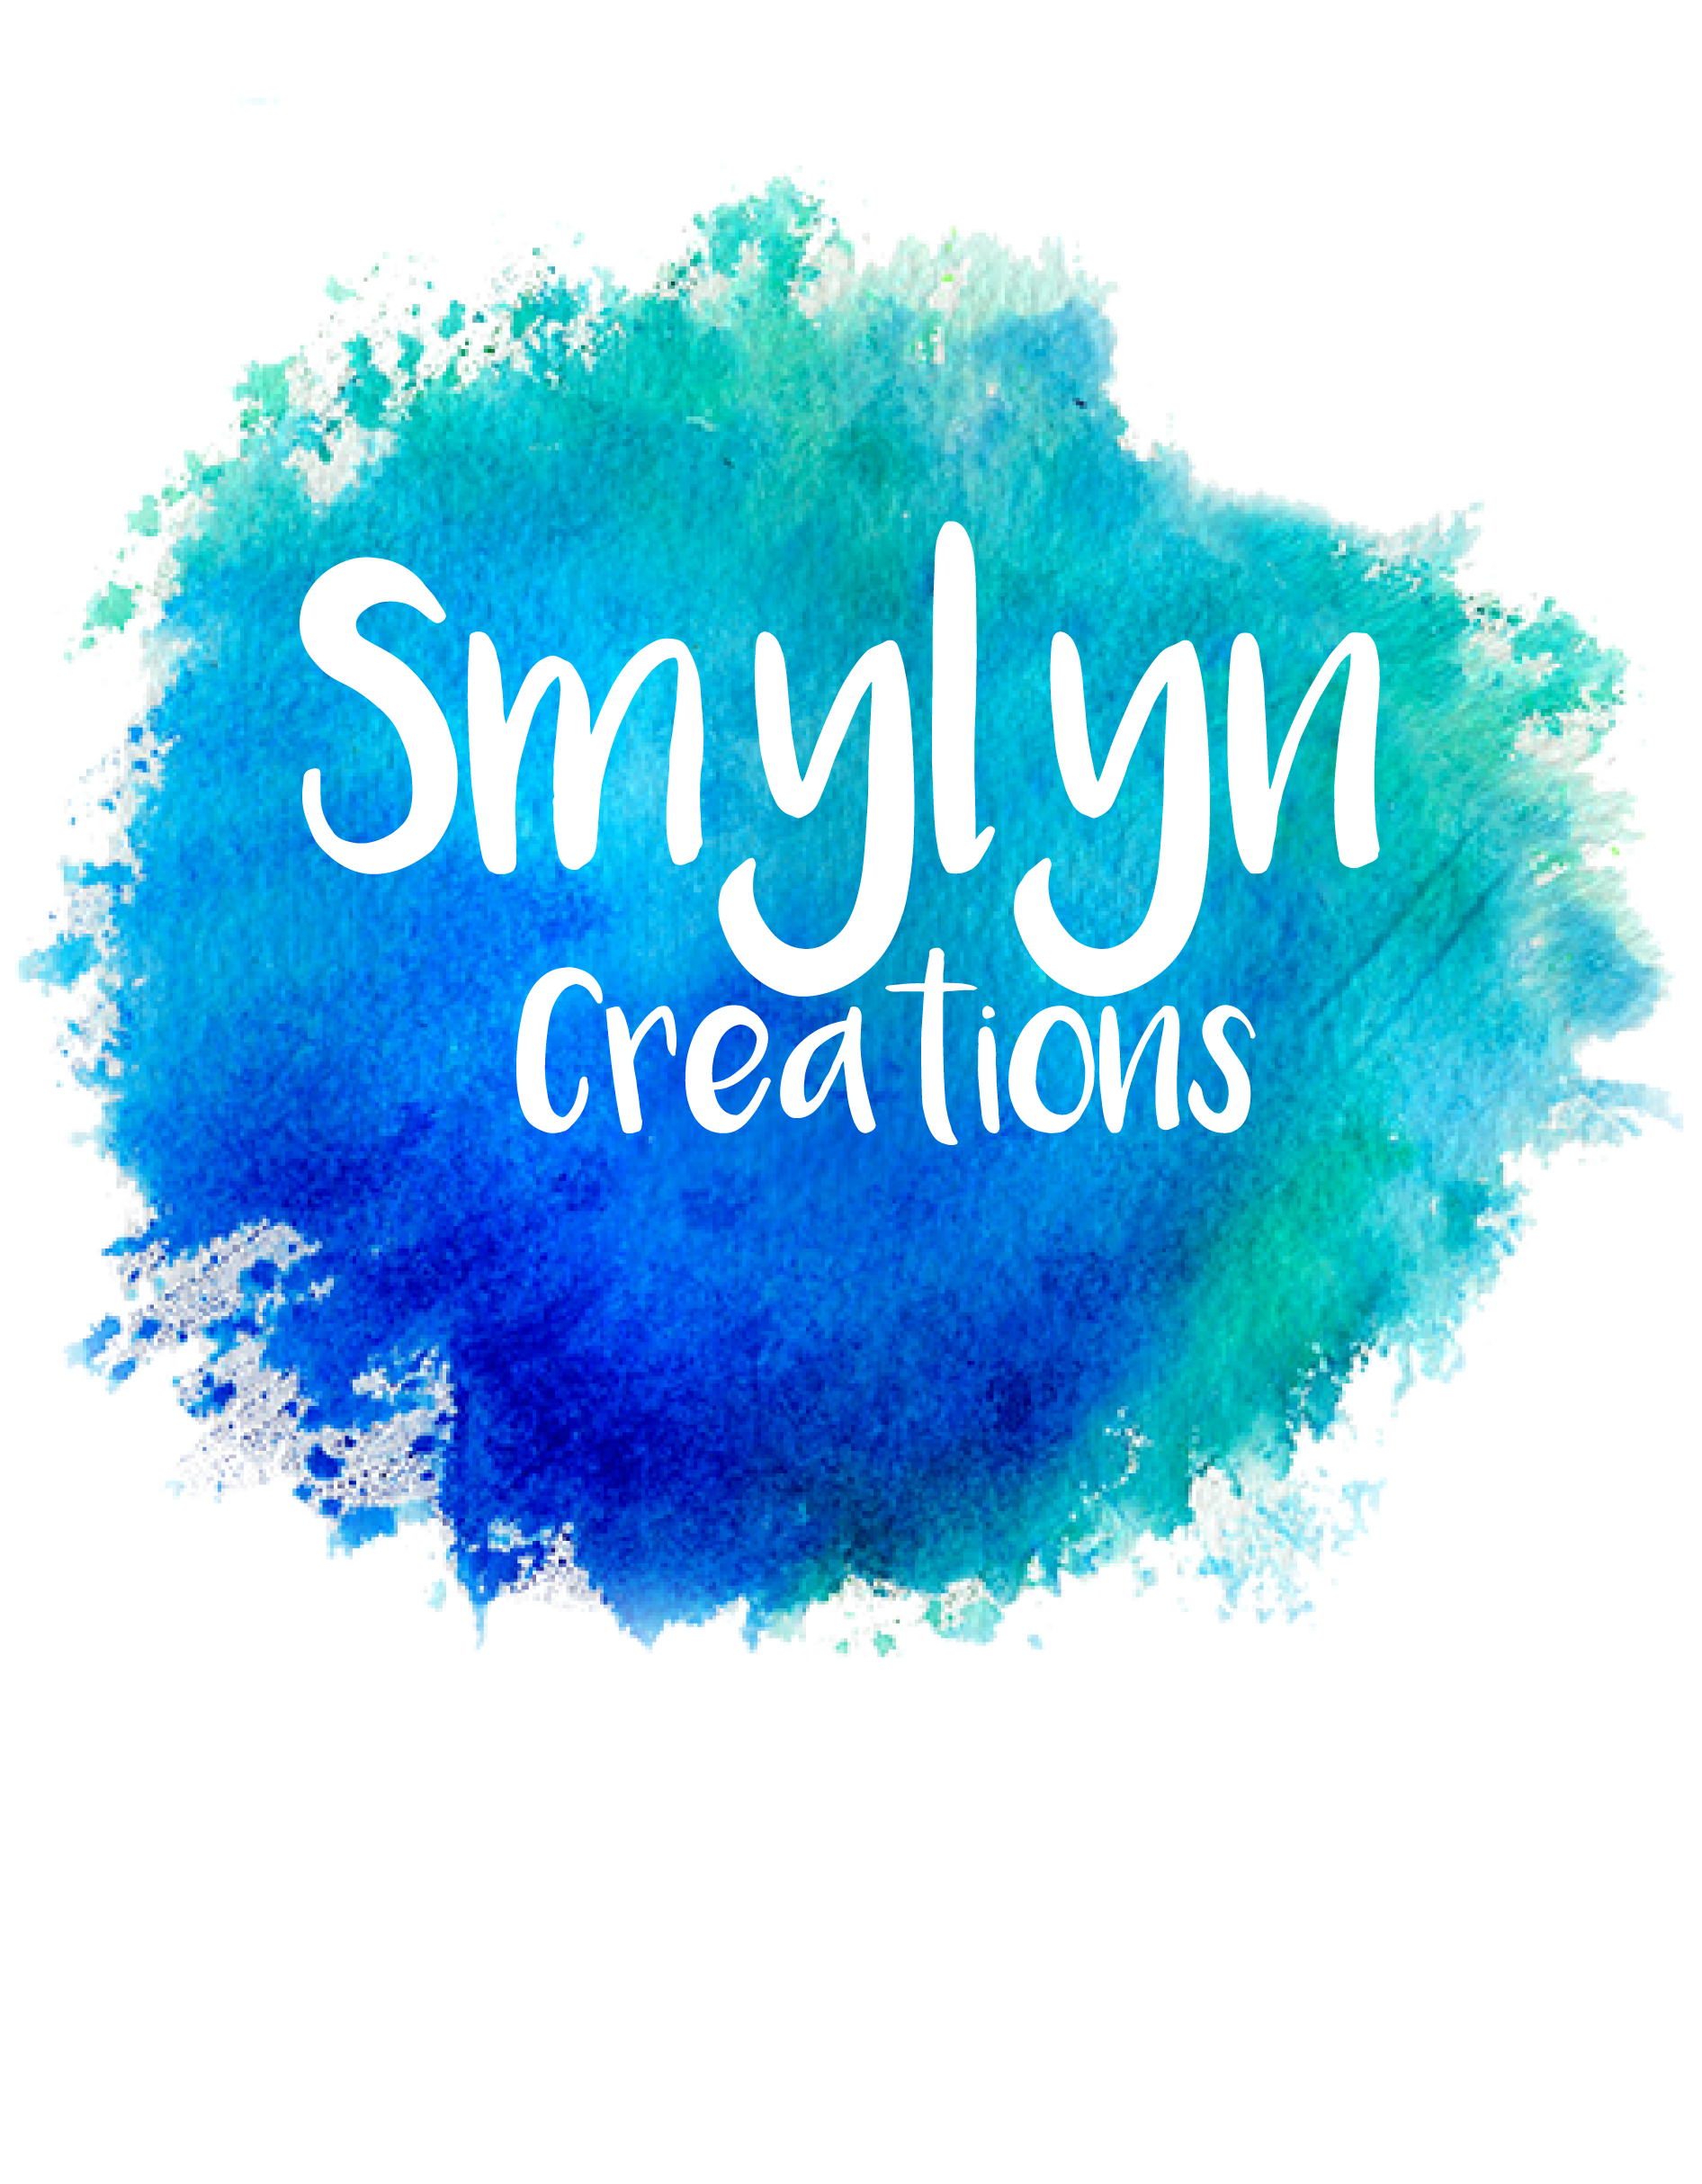 Smylyn Creations